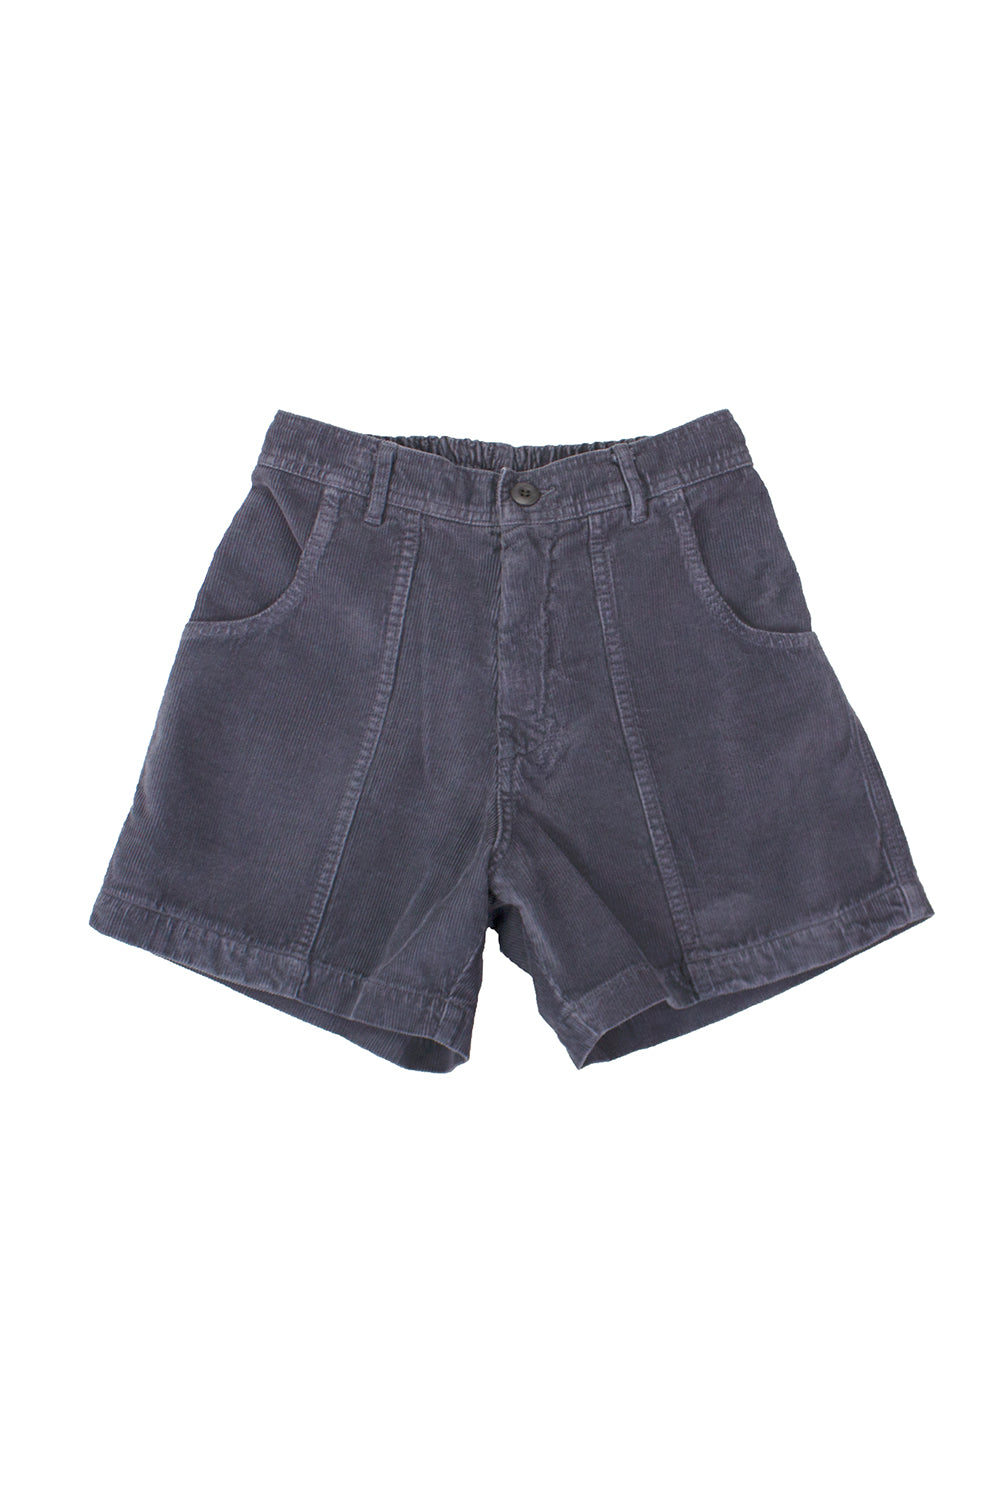 jungmaven hemp and organic cotton cabuya cord shorts